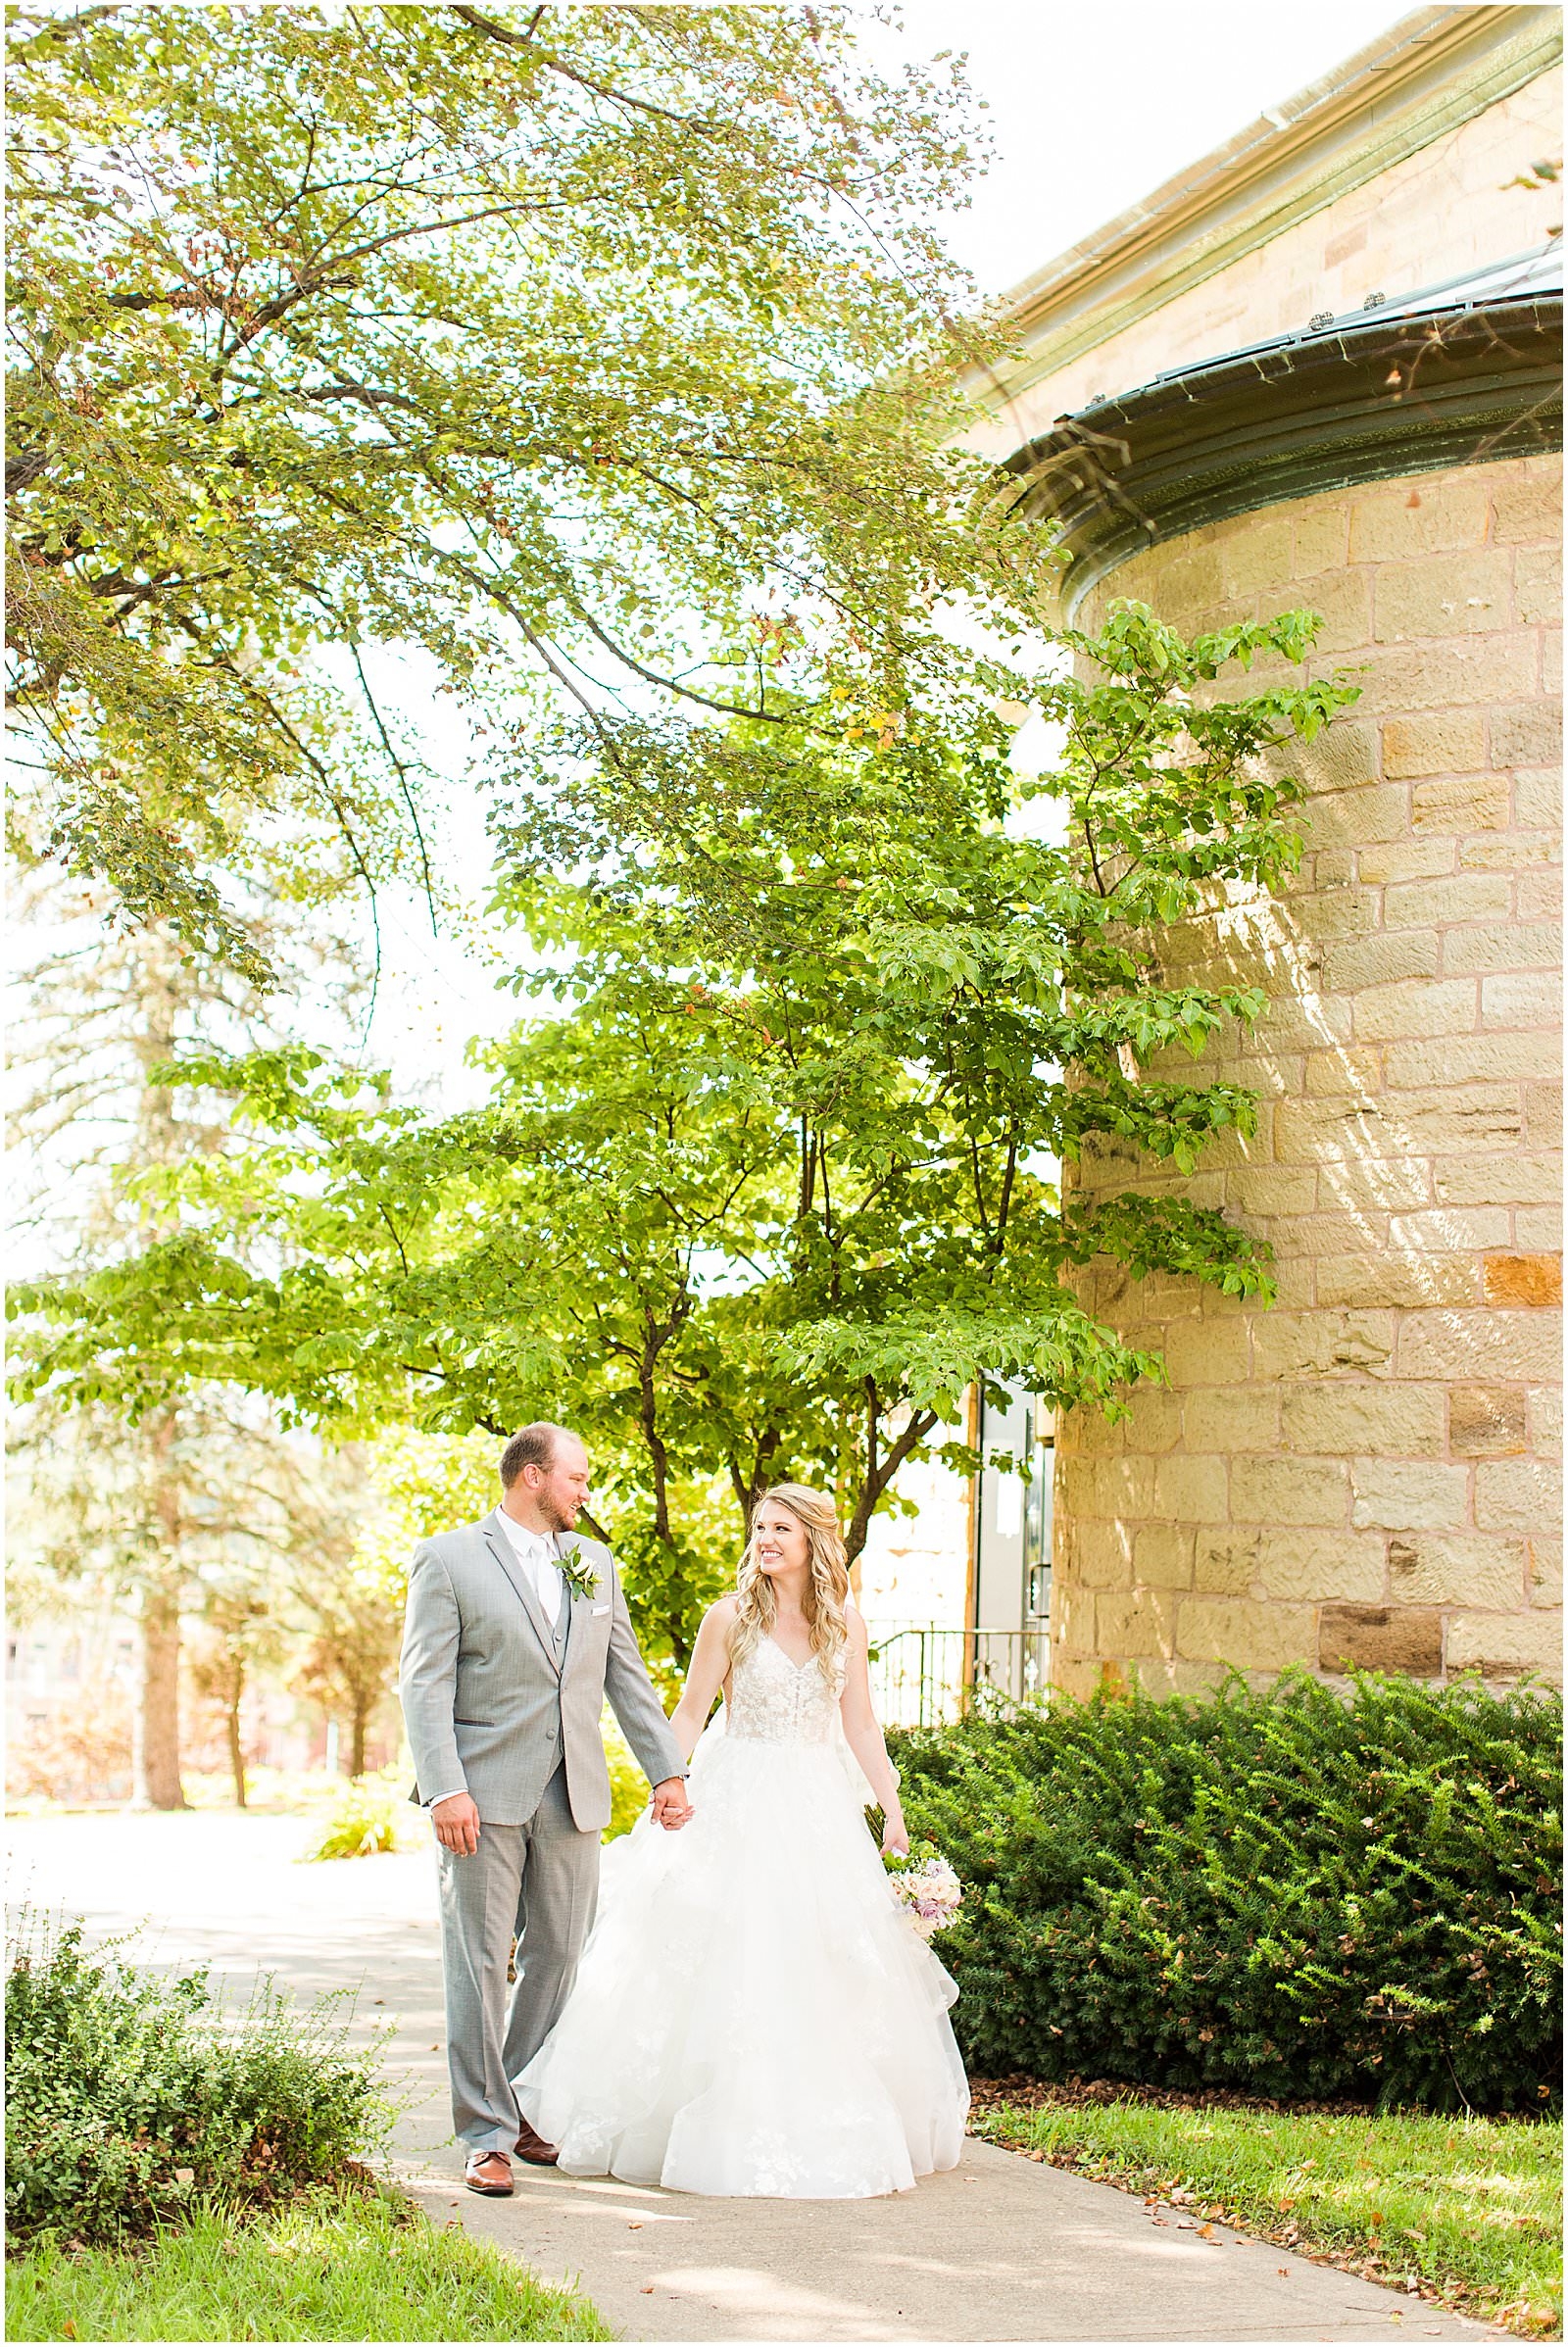 A Charming Ferdinand Indiana Wedding | Alexa and Brandon | Bret and Brandie Photo0113.jpg